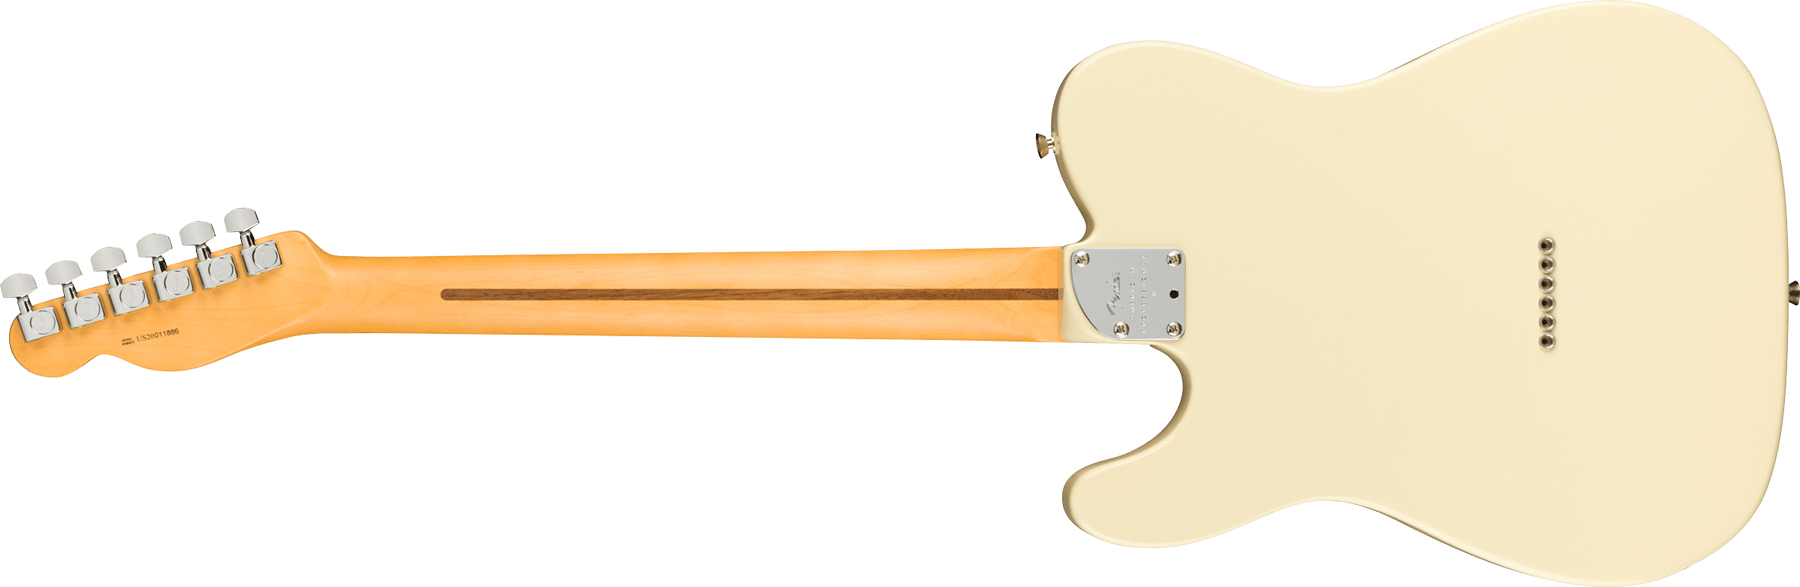 Fender Tele American Professional Ii Usa Rw - Olympic White - Tel shape electric guitar - Variation 1